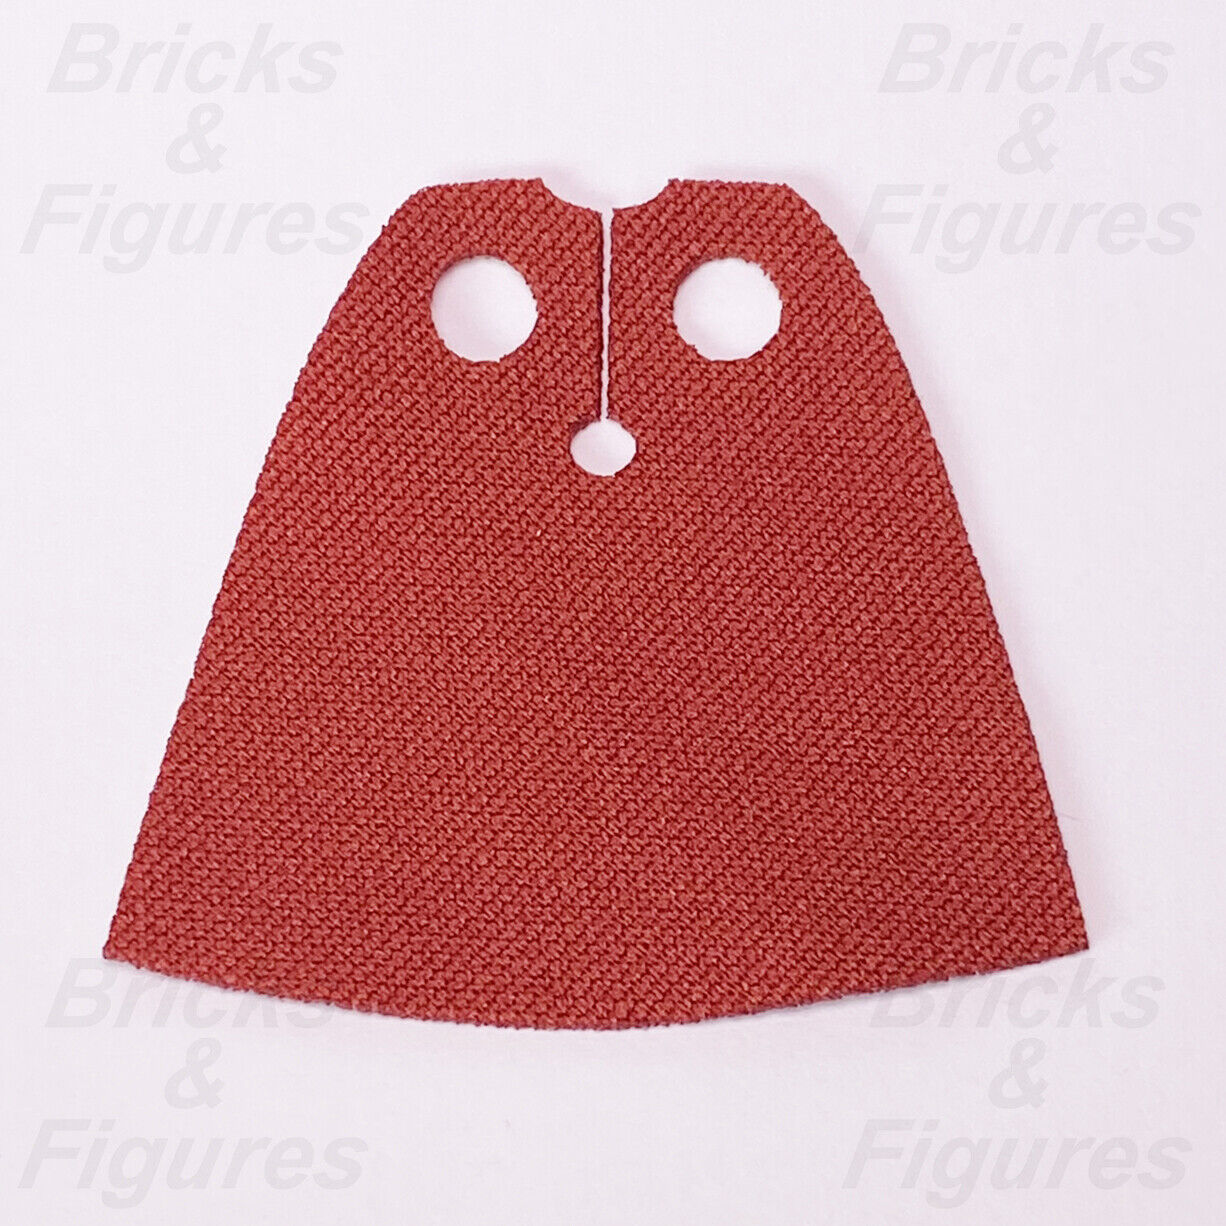 Harry Potter LEGO Dark Red Spongy Cape Robe Cloth Minifigure Part 19888 75956